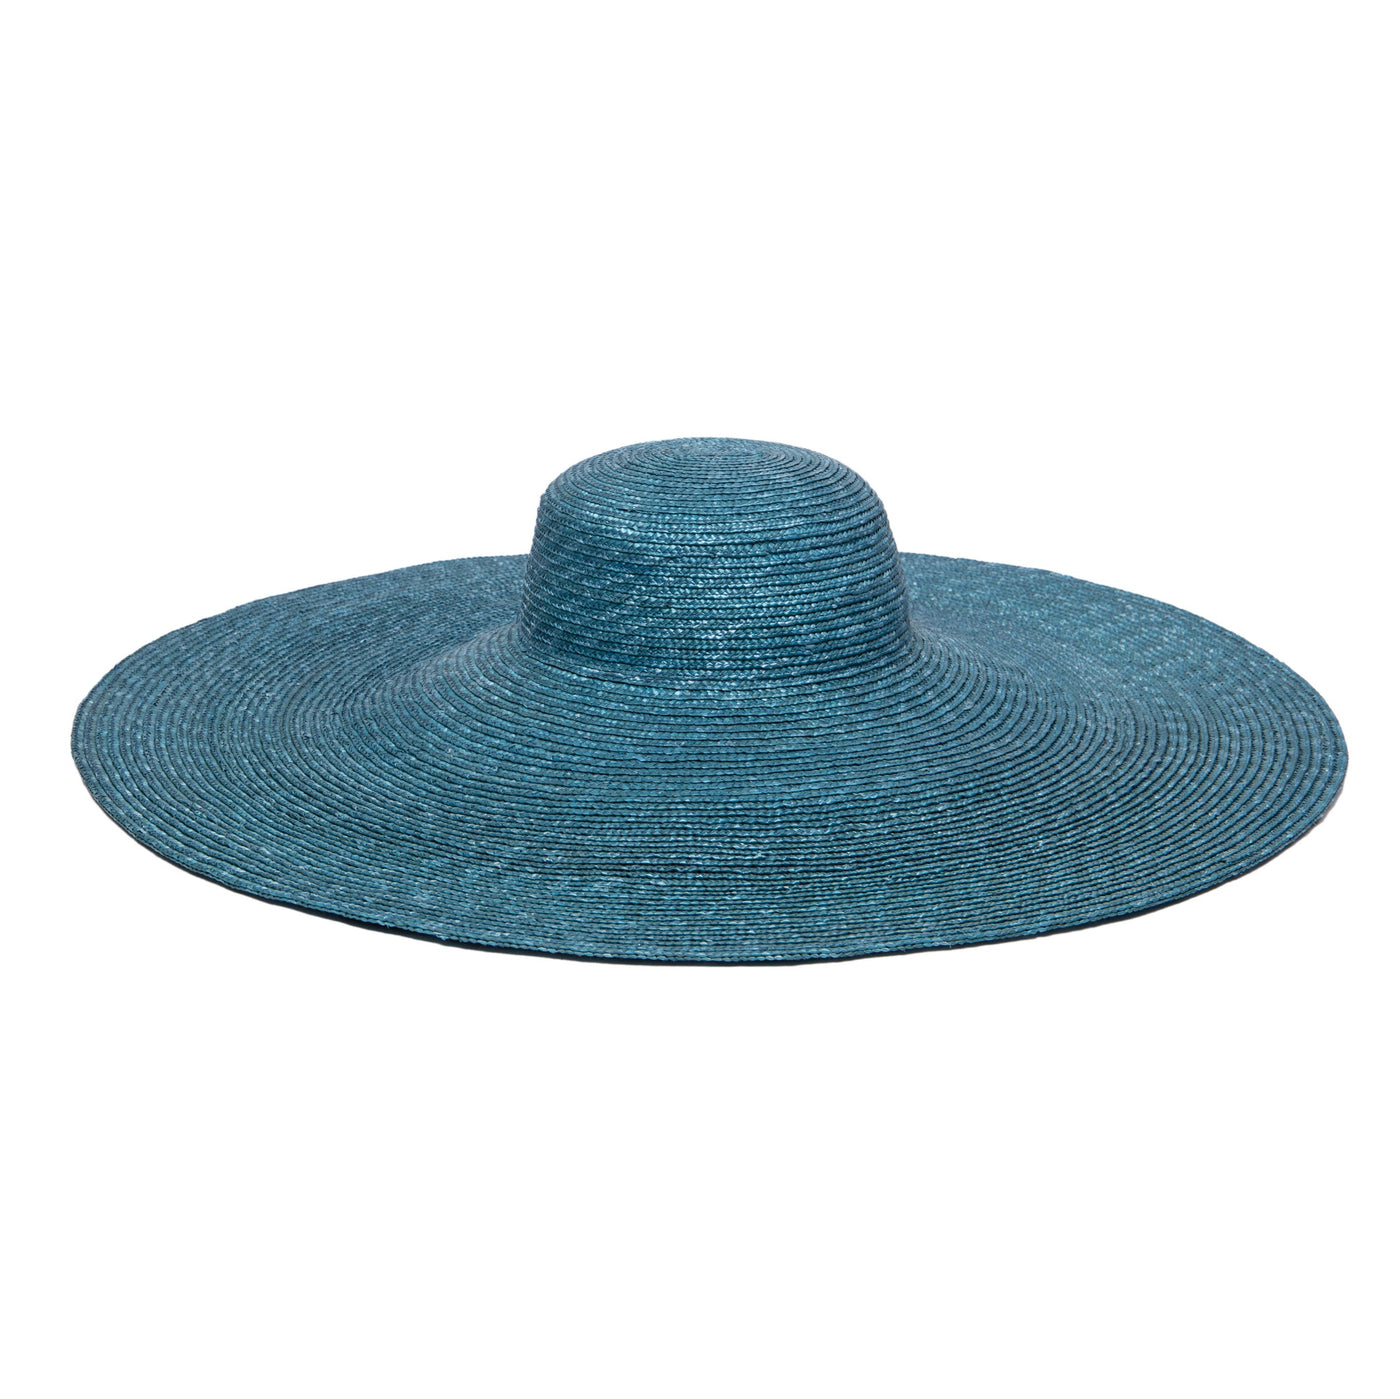 SUN BRIM - On Holiday - Oversized Wide Brim Sun Hat